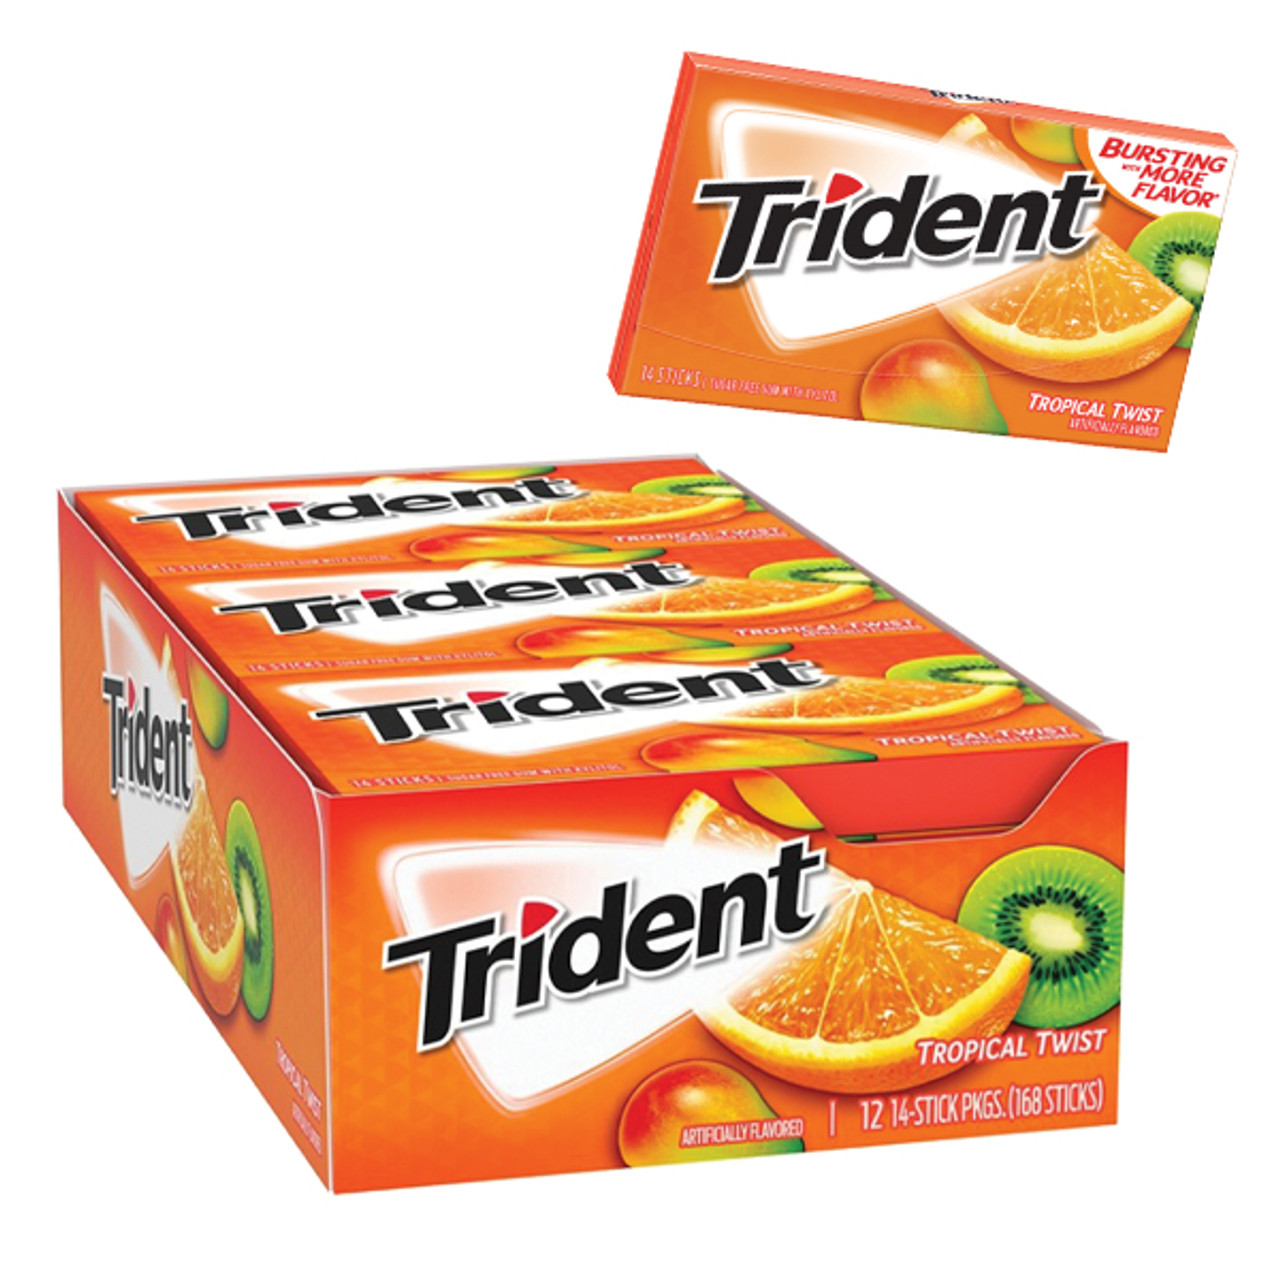 Trident Gum - Tropical Twist - 12ct Display Box